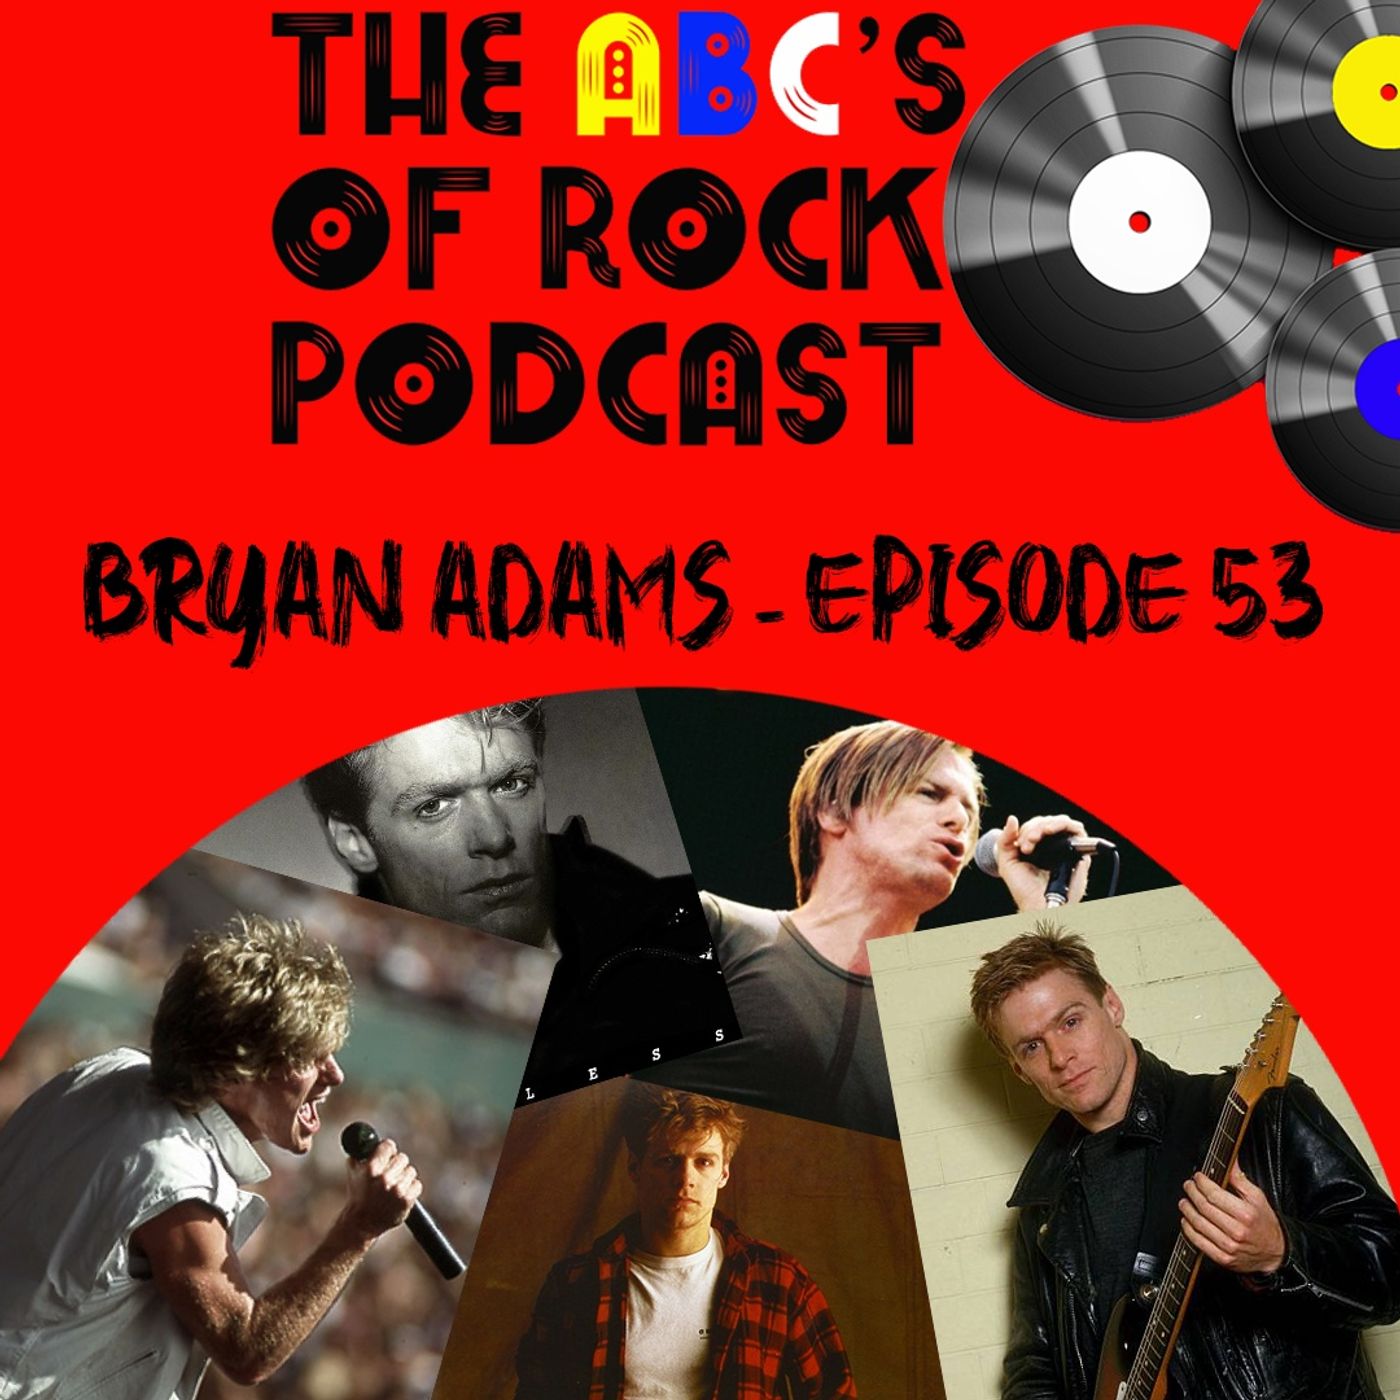 Bryan Adams - "We May Be Losers" - Episode 53